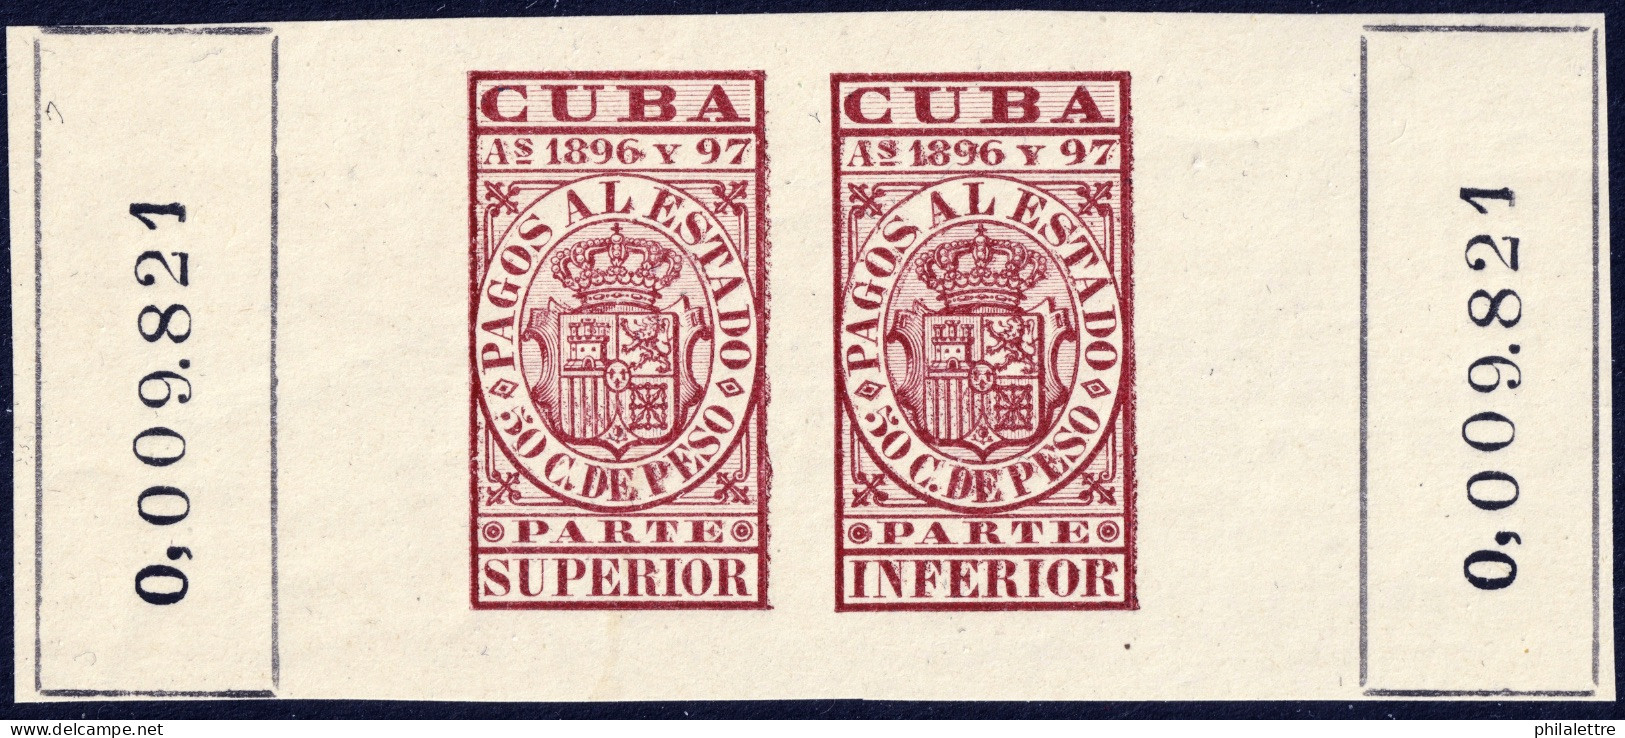 ESPAGNE / ESPANA - COLONIAS (Cuba) 1896/97 "PAGOS AL ESTADO" Fulcher 1164+1176 50c Sello Doble Nuevo** (0.009.821) - Kuba (1874-1898)